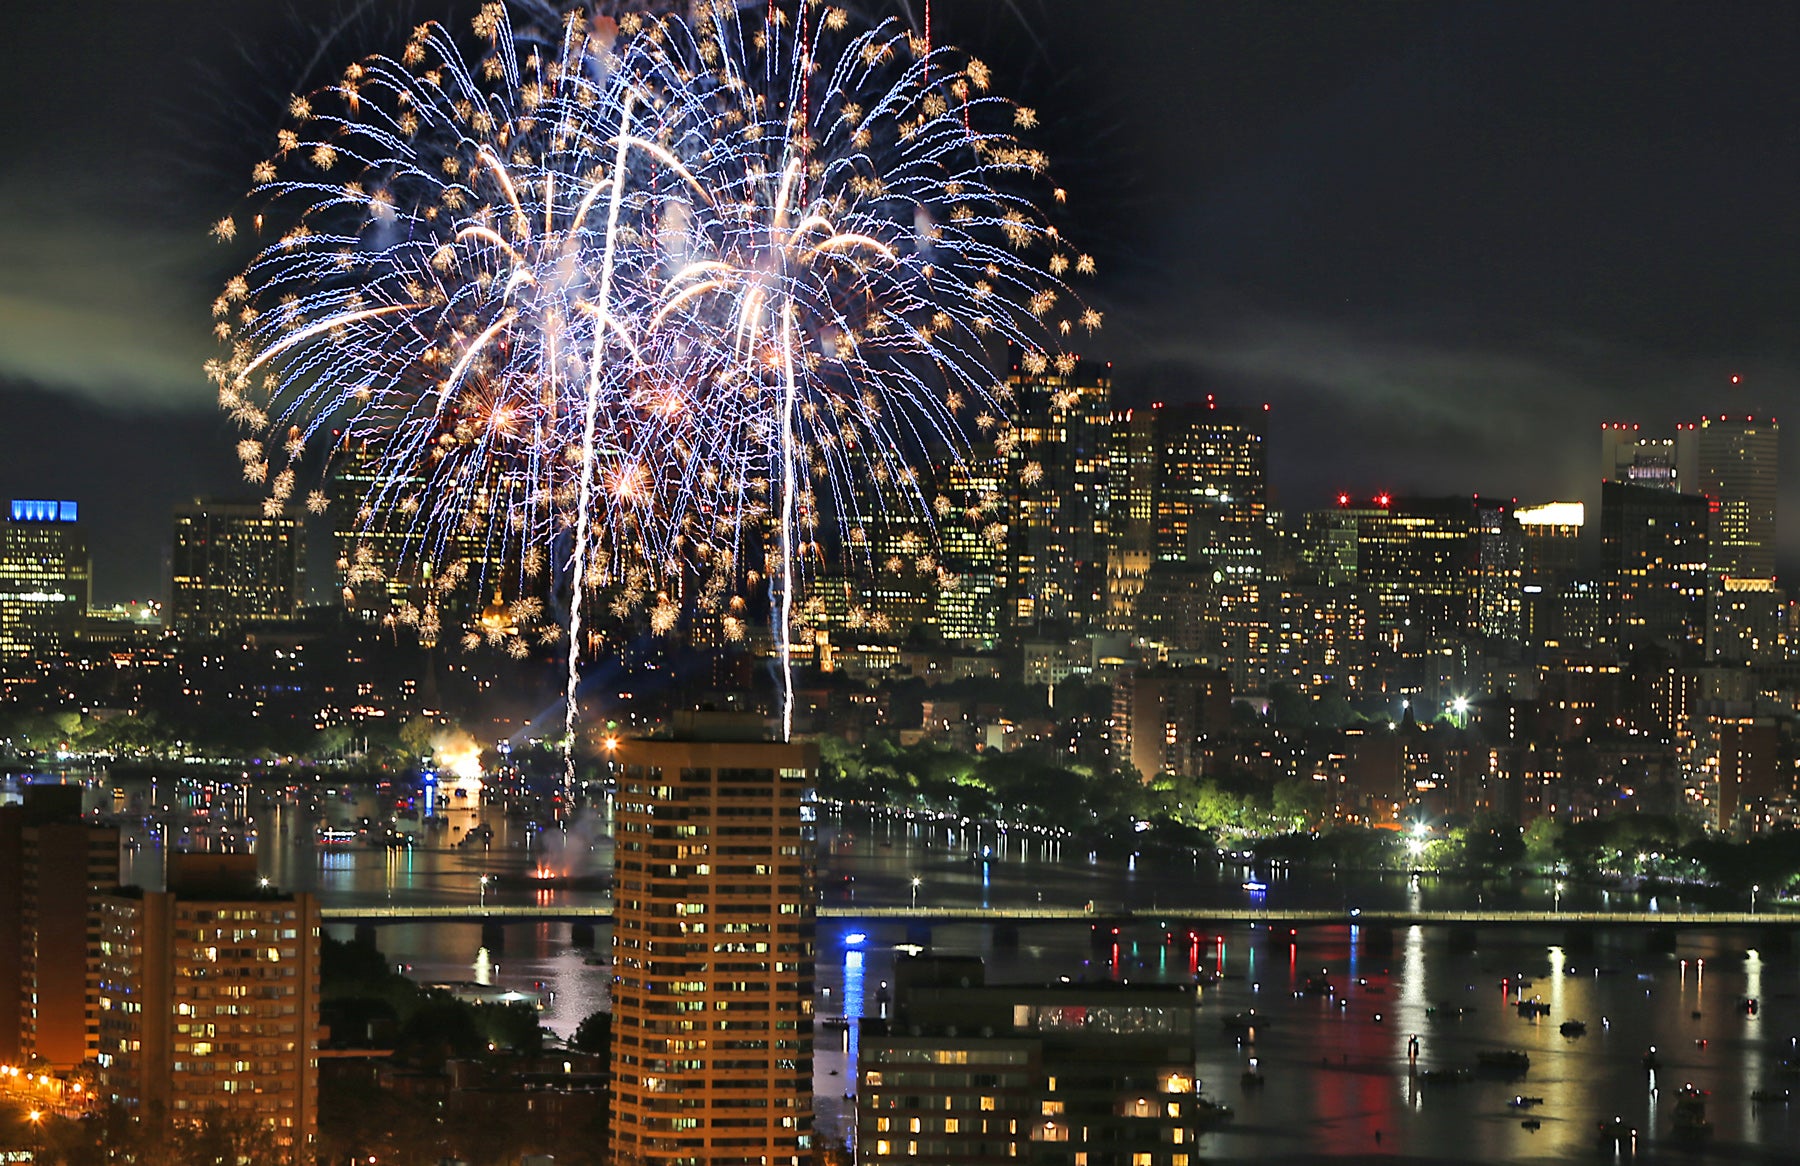 Breathtaking photos of the fireworks lighting up Boston